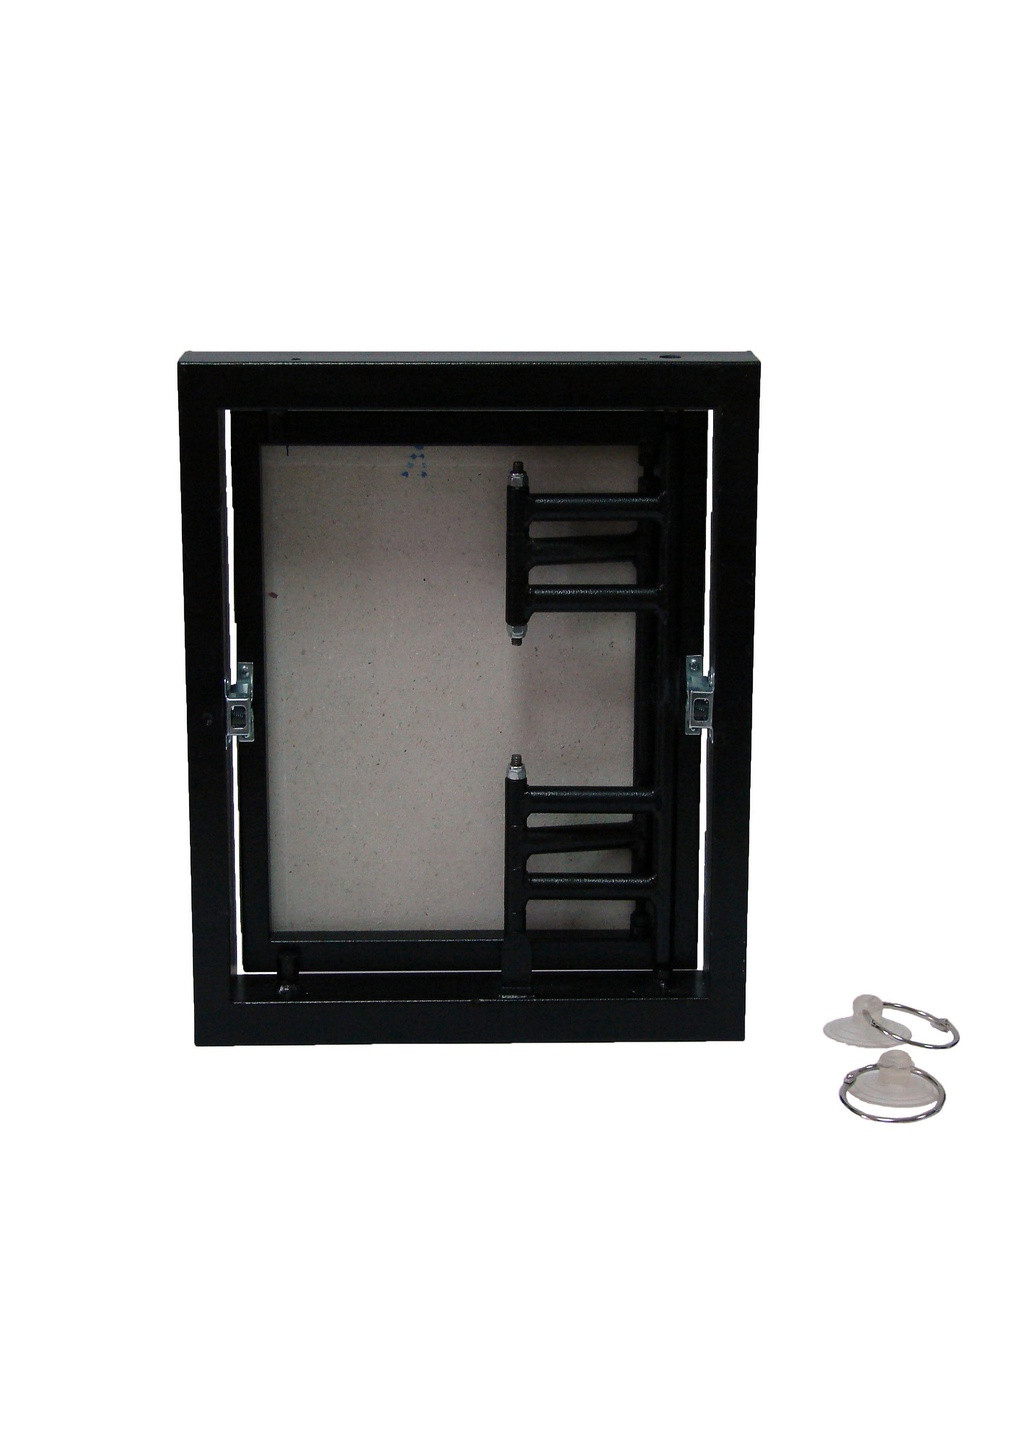 Ревизионный люк скрытого монтажа под плитку фронтальнораспашного типа 250x350 ревизионная дверца для плитки (1216) S-Dom (266339640)